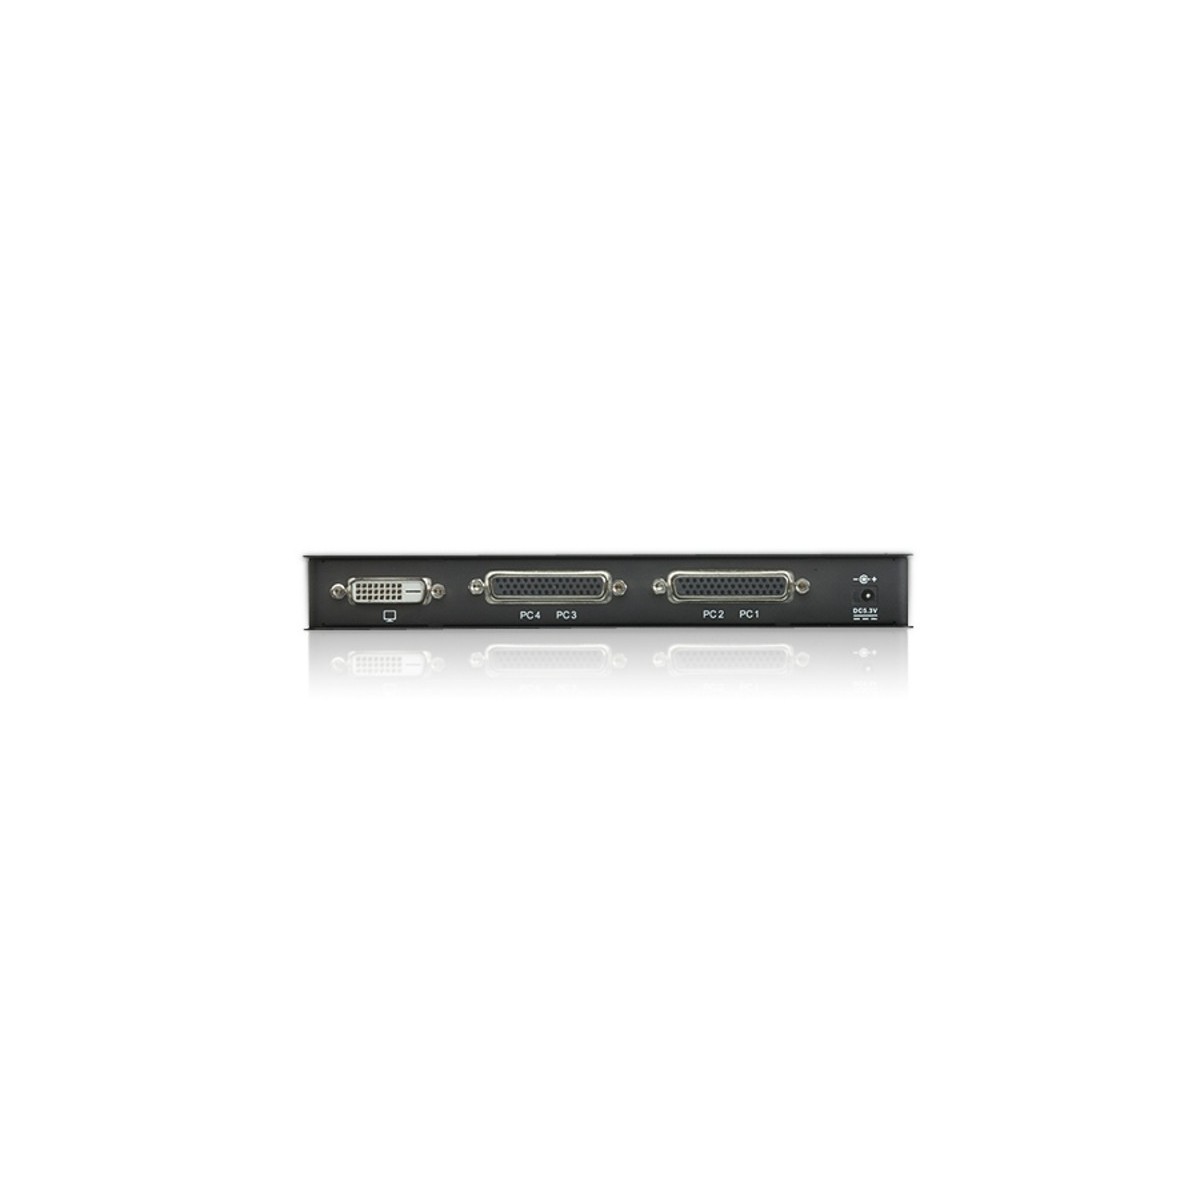 ATEN 4 port USB DVI DesktopKVM Switch - Kvm Switch - 4-port